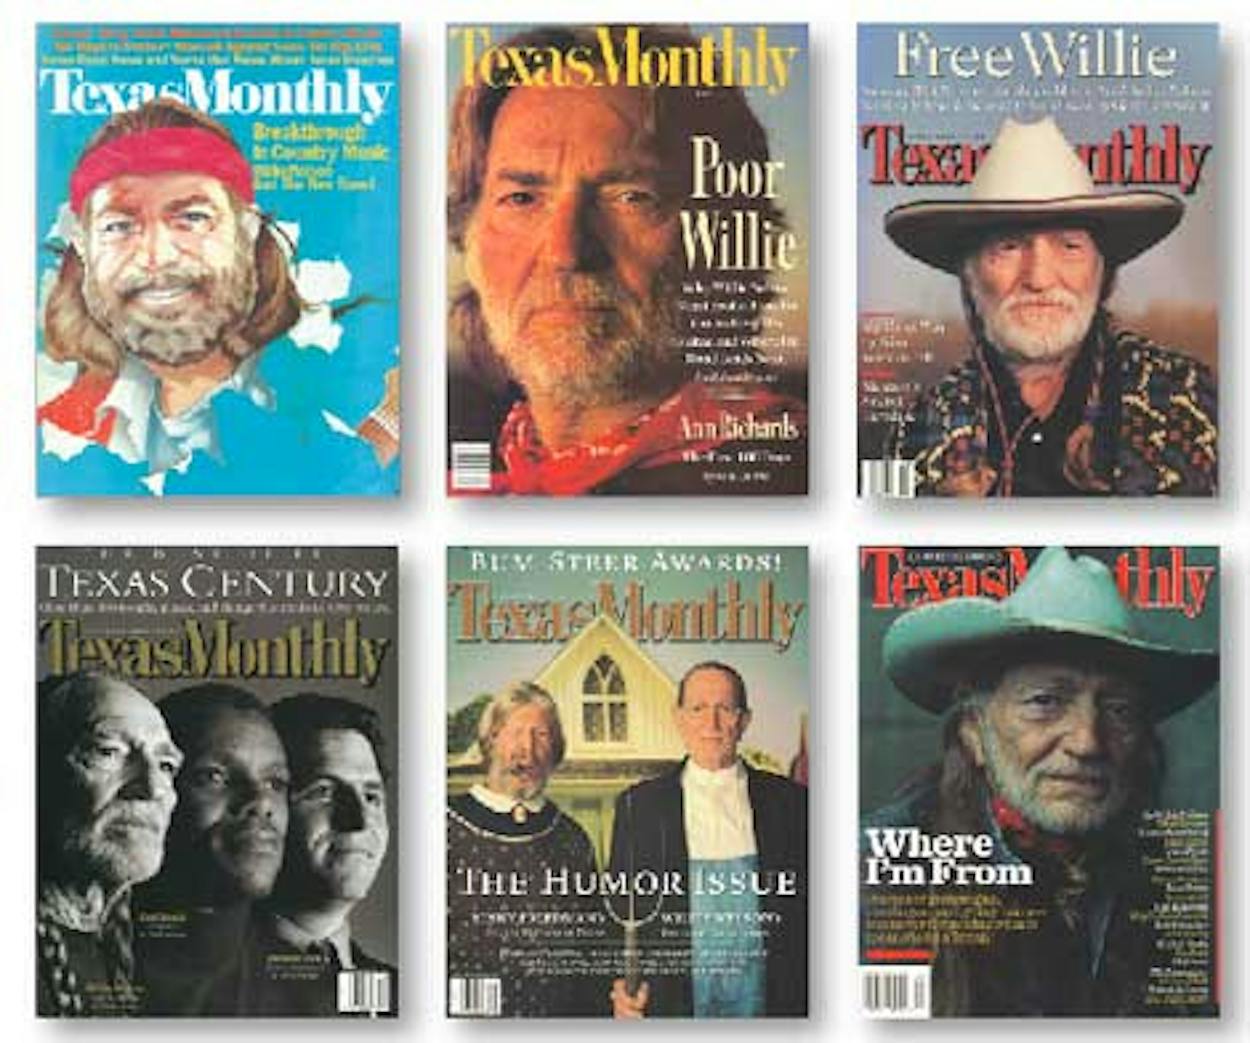 Poor Willie – Texas Monthly